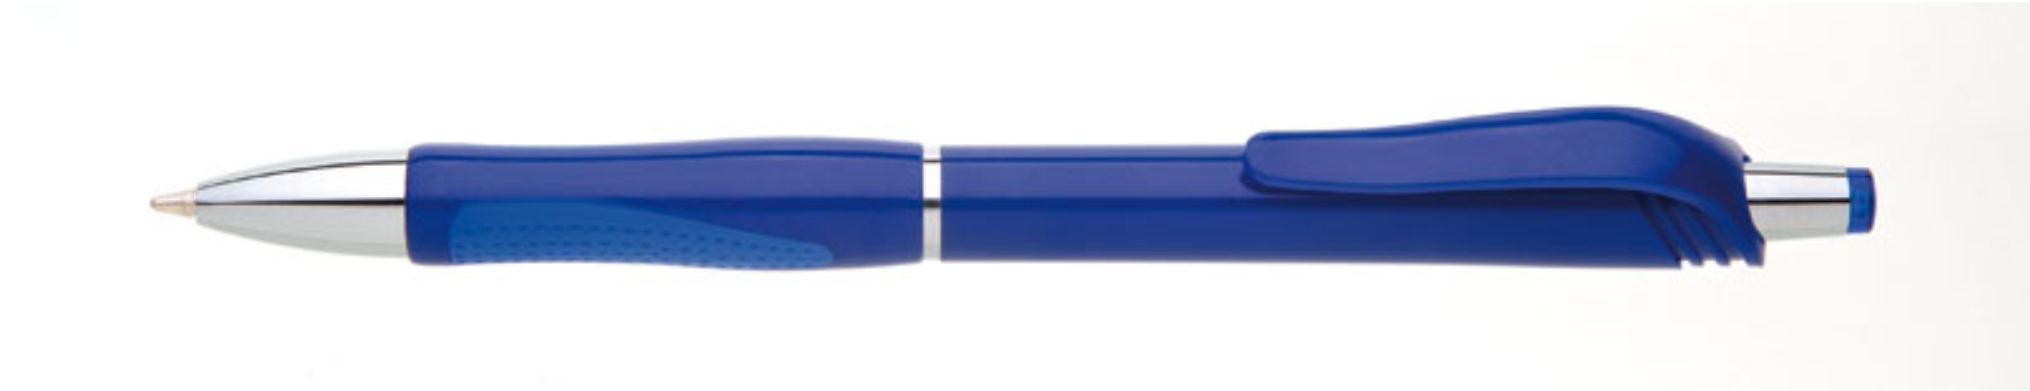 Propiska plast SALA hrot 1mm, modrá